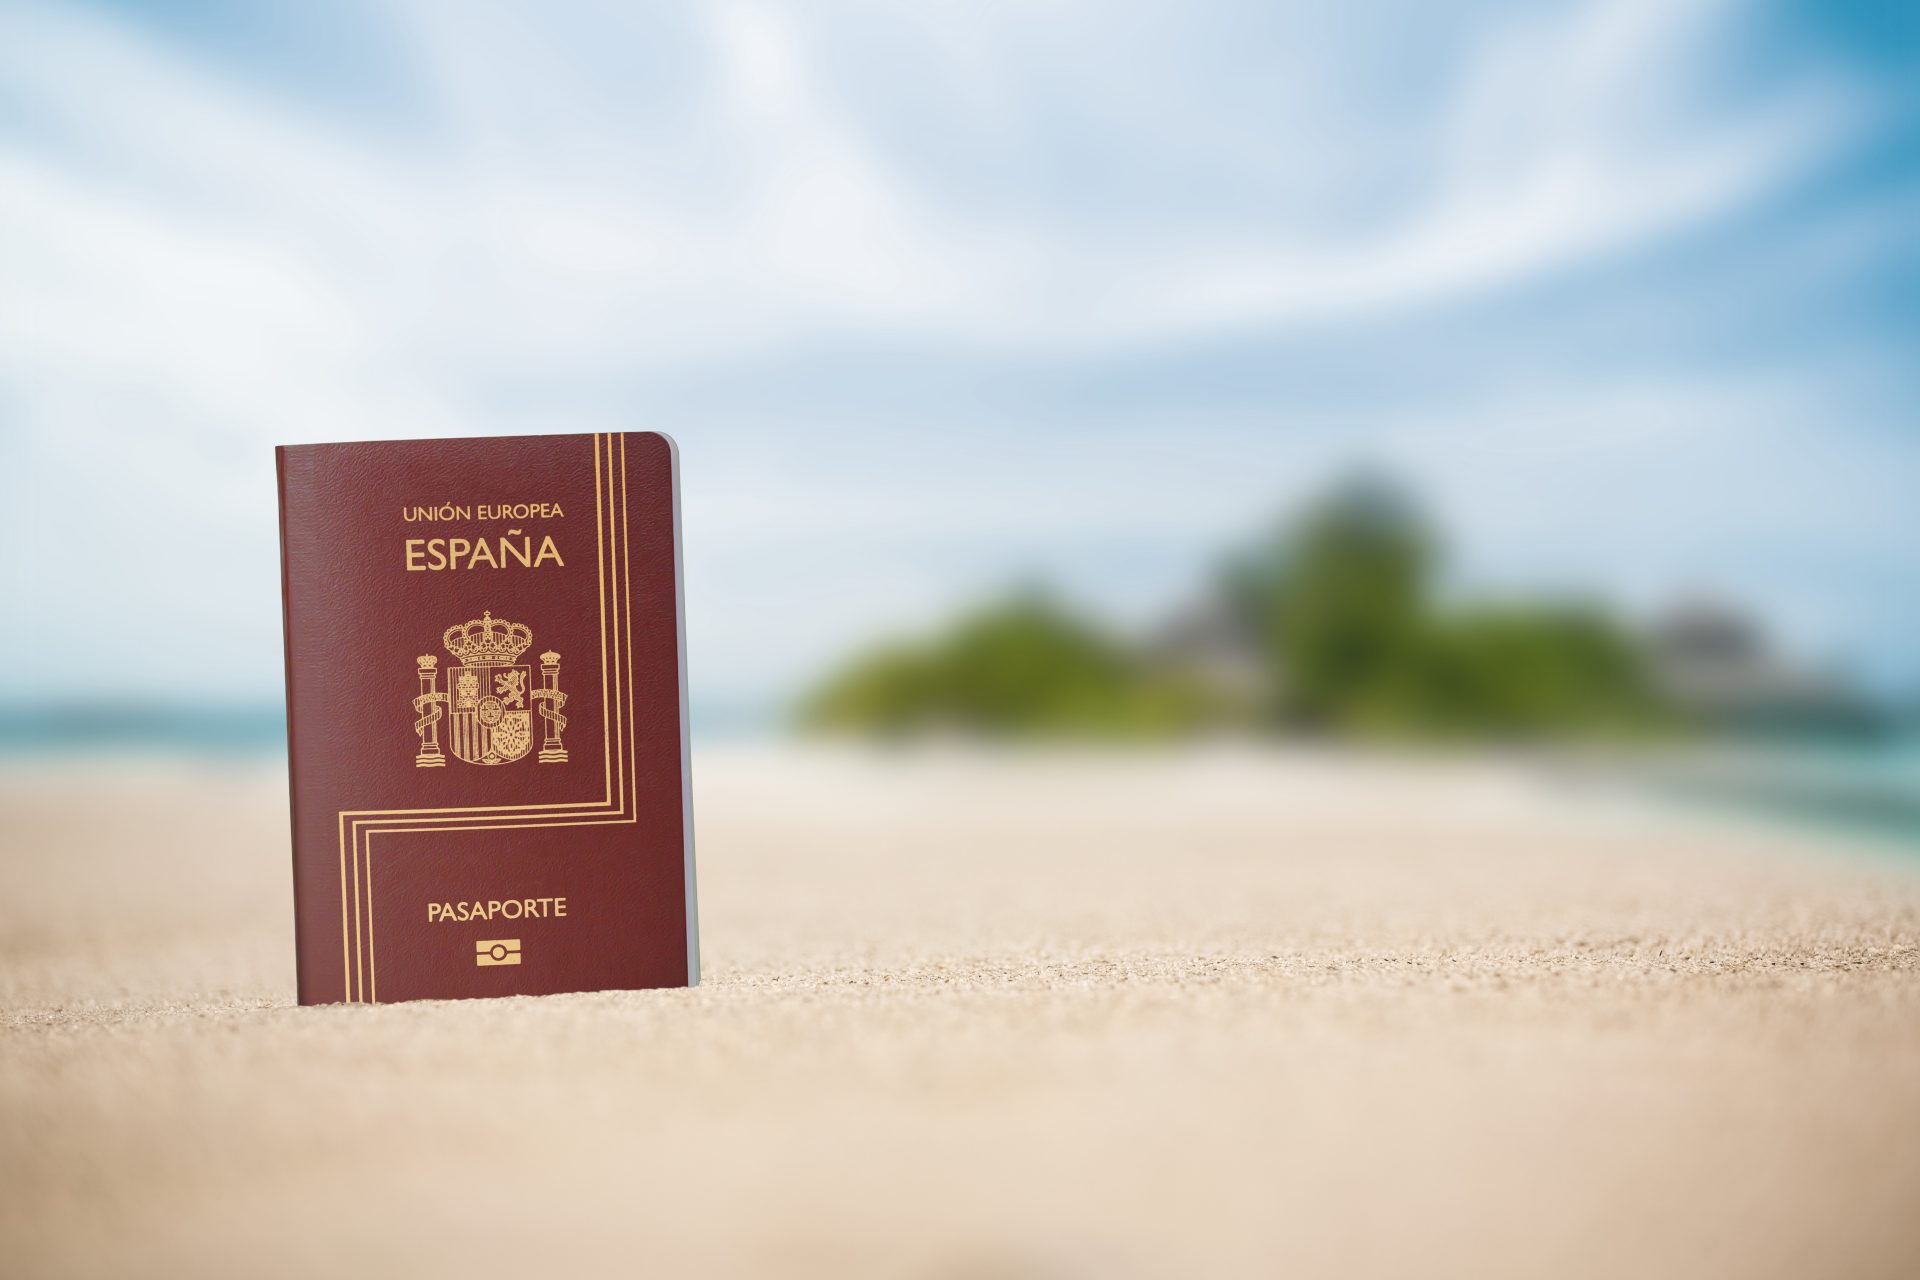 Паспорт гражданина Испании в песке